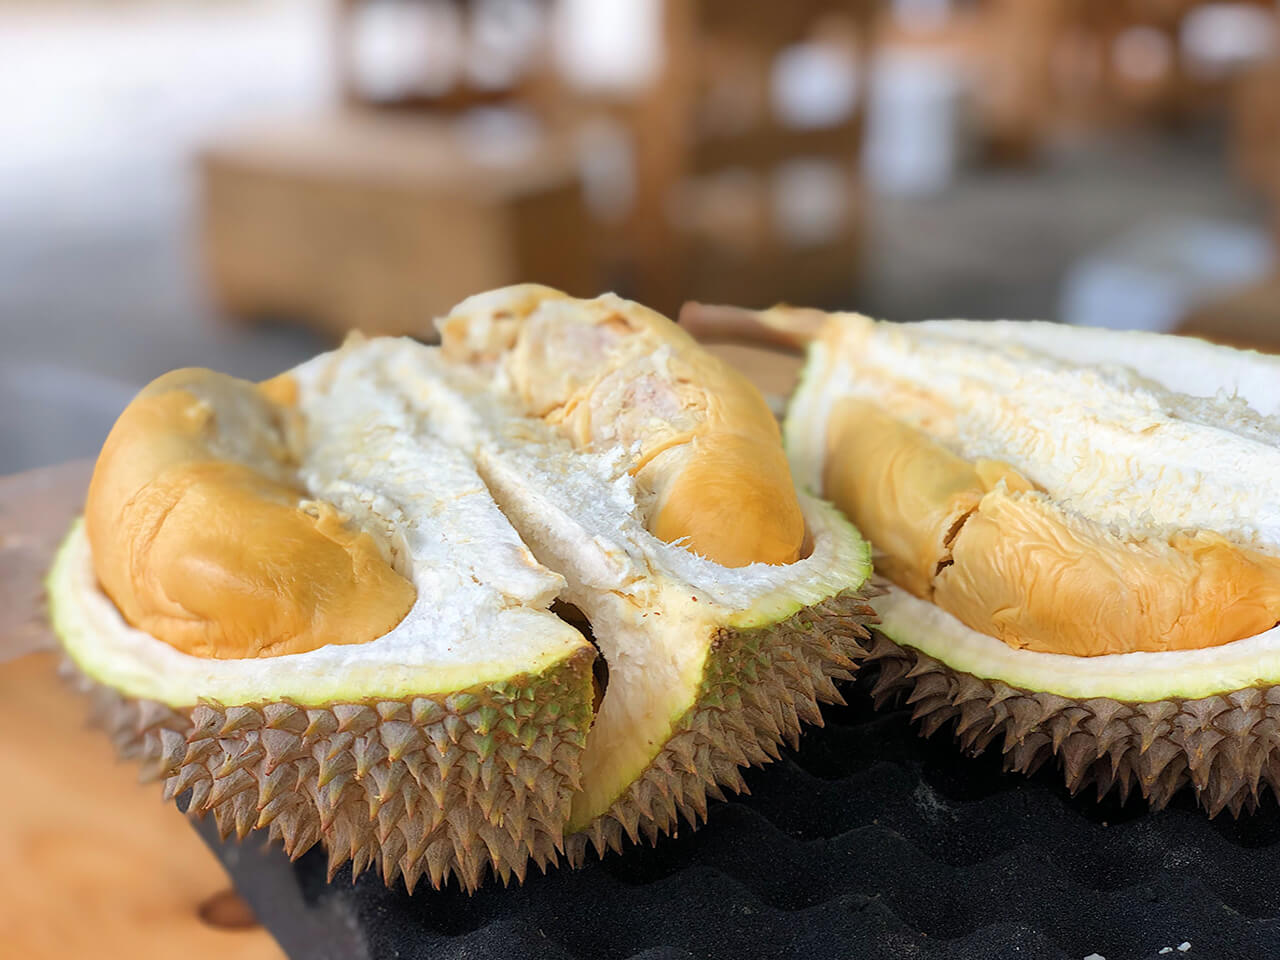 5. Singapore has durian fruit